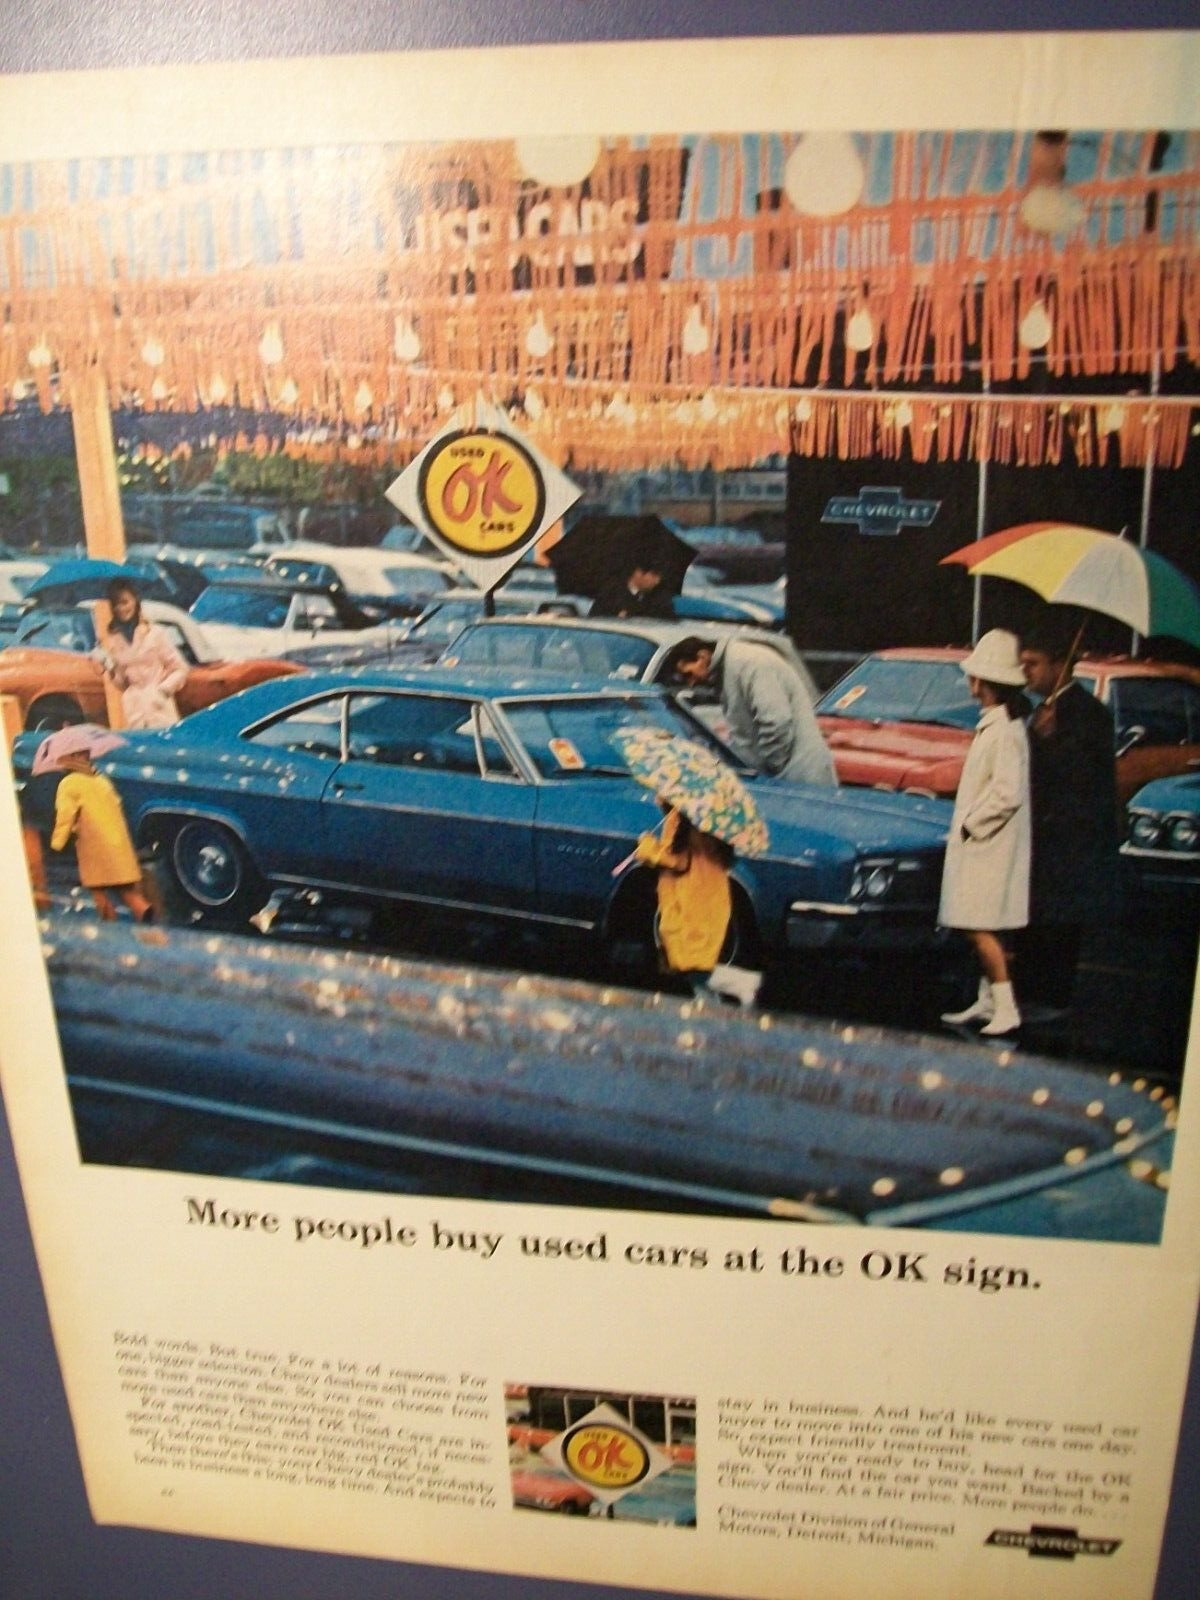 1966 Chevy Impala large-mag 1968 OK Used Car ad